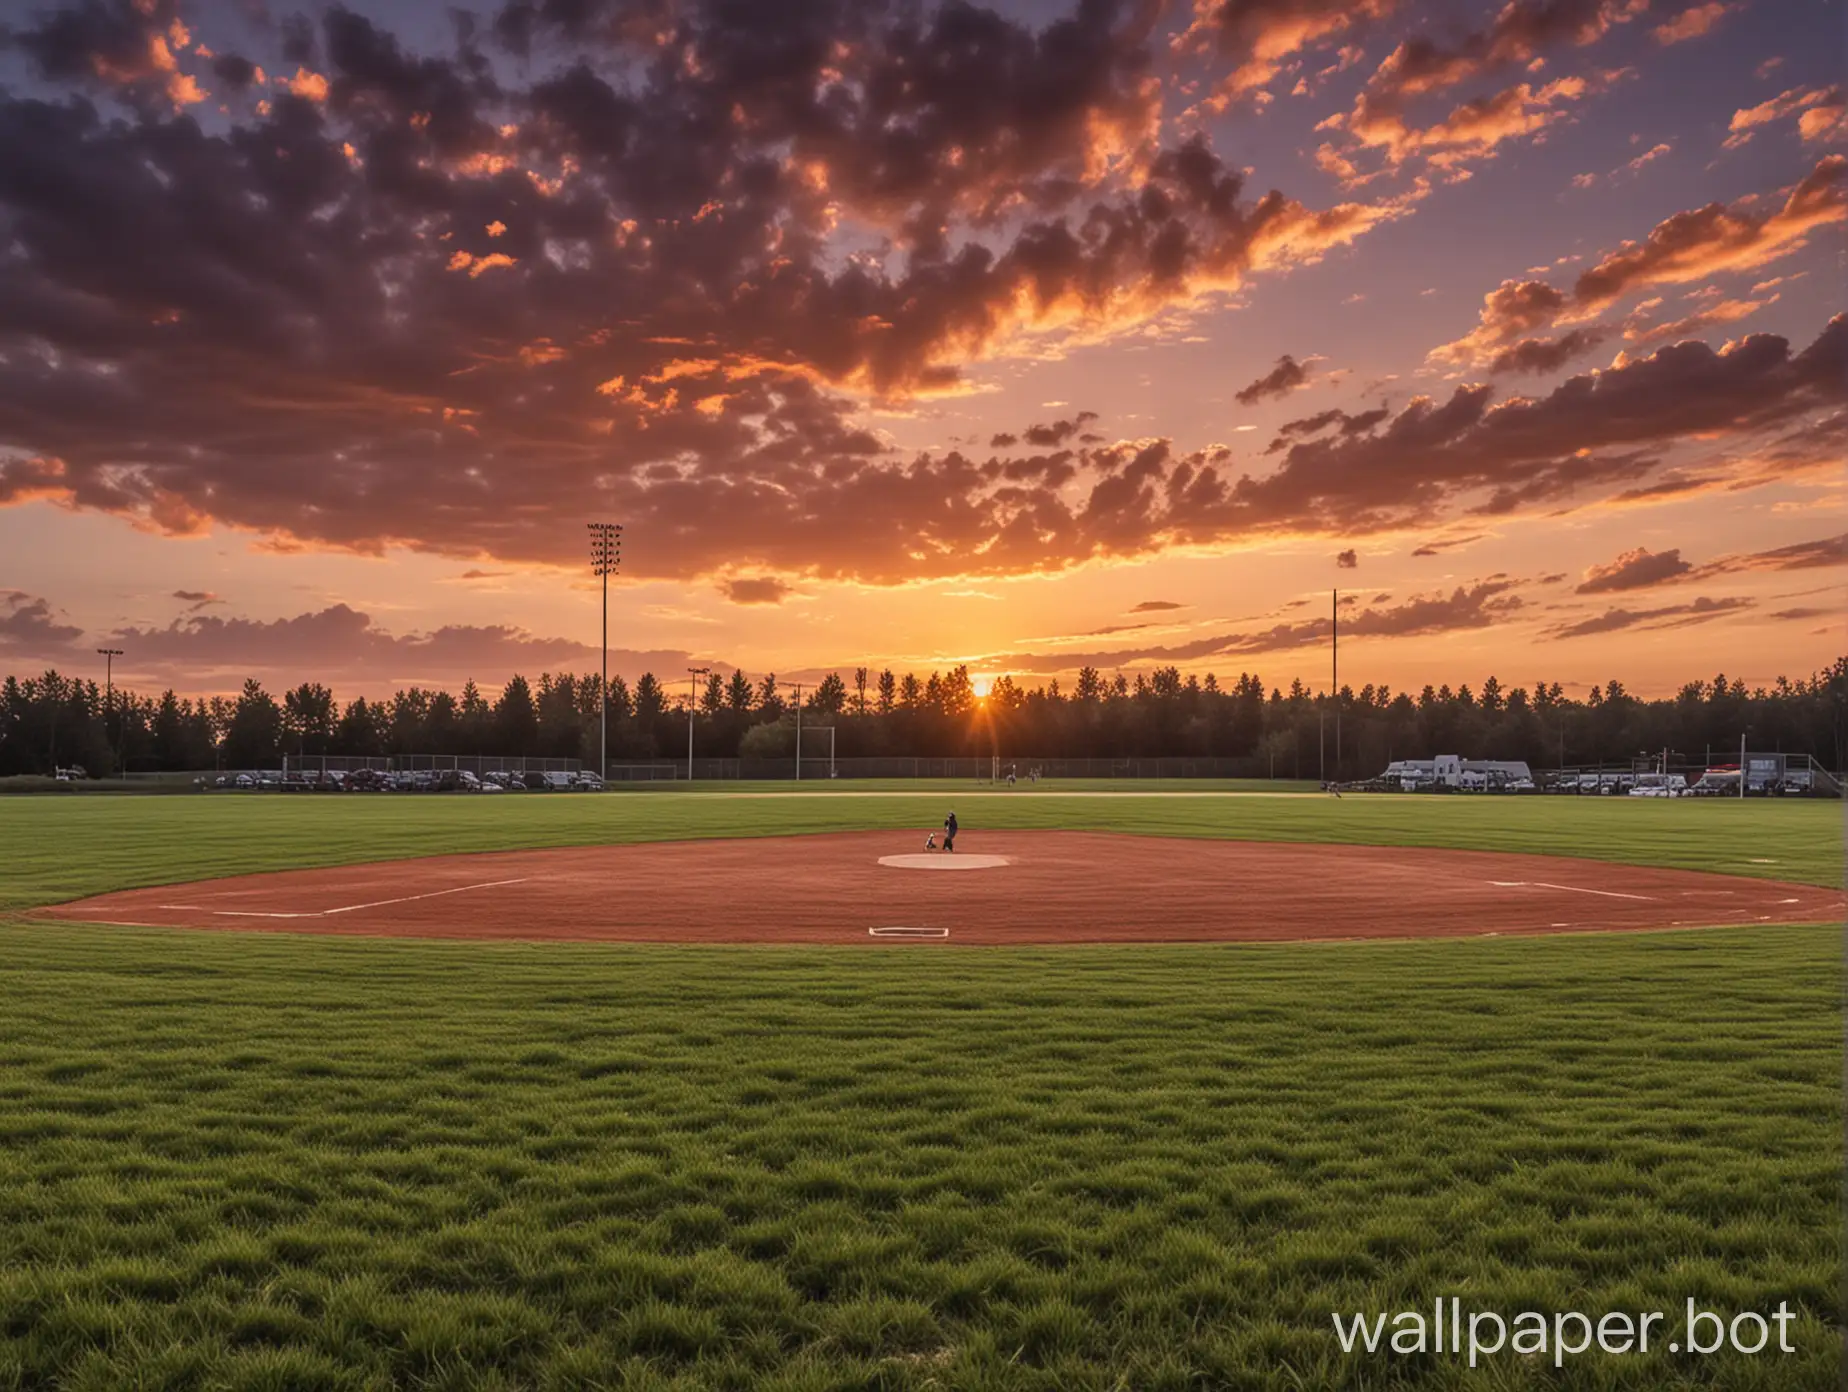 Sunset-Baseball-Game-at-Field-of-Dreams-Stadium